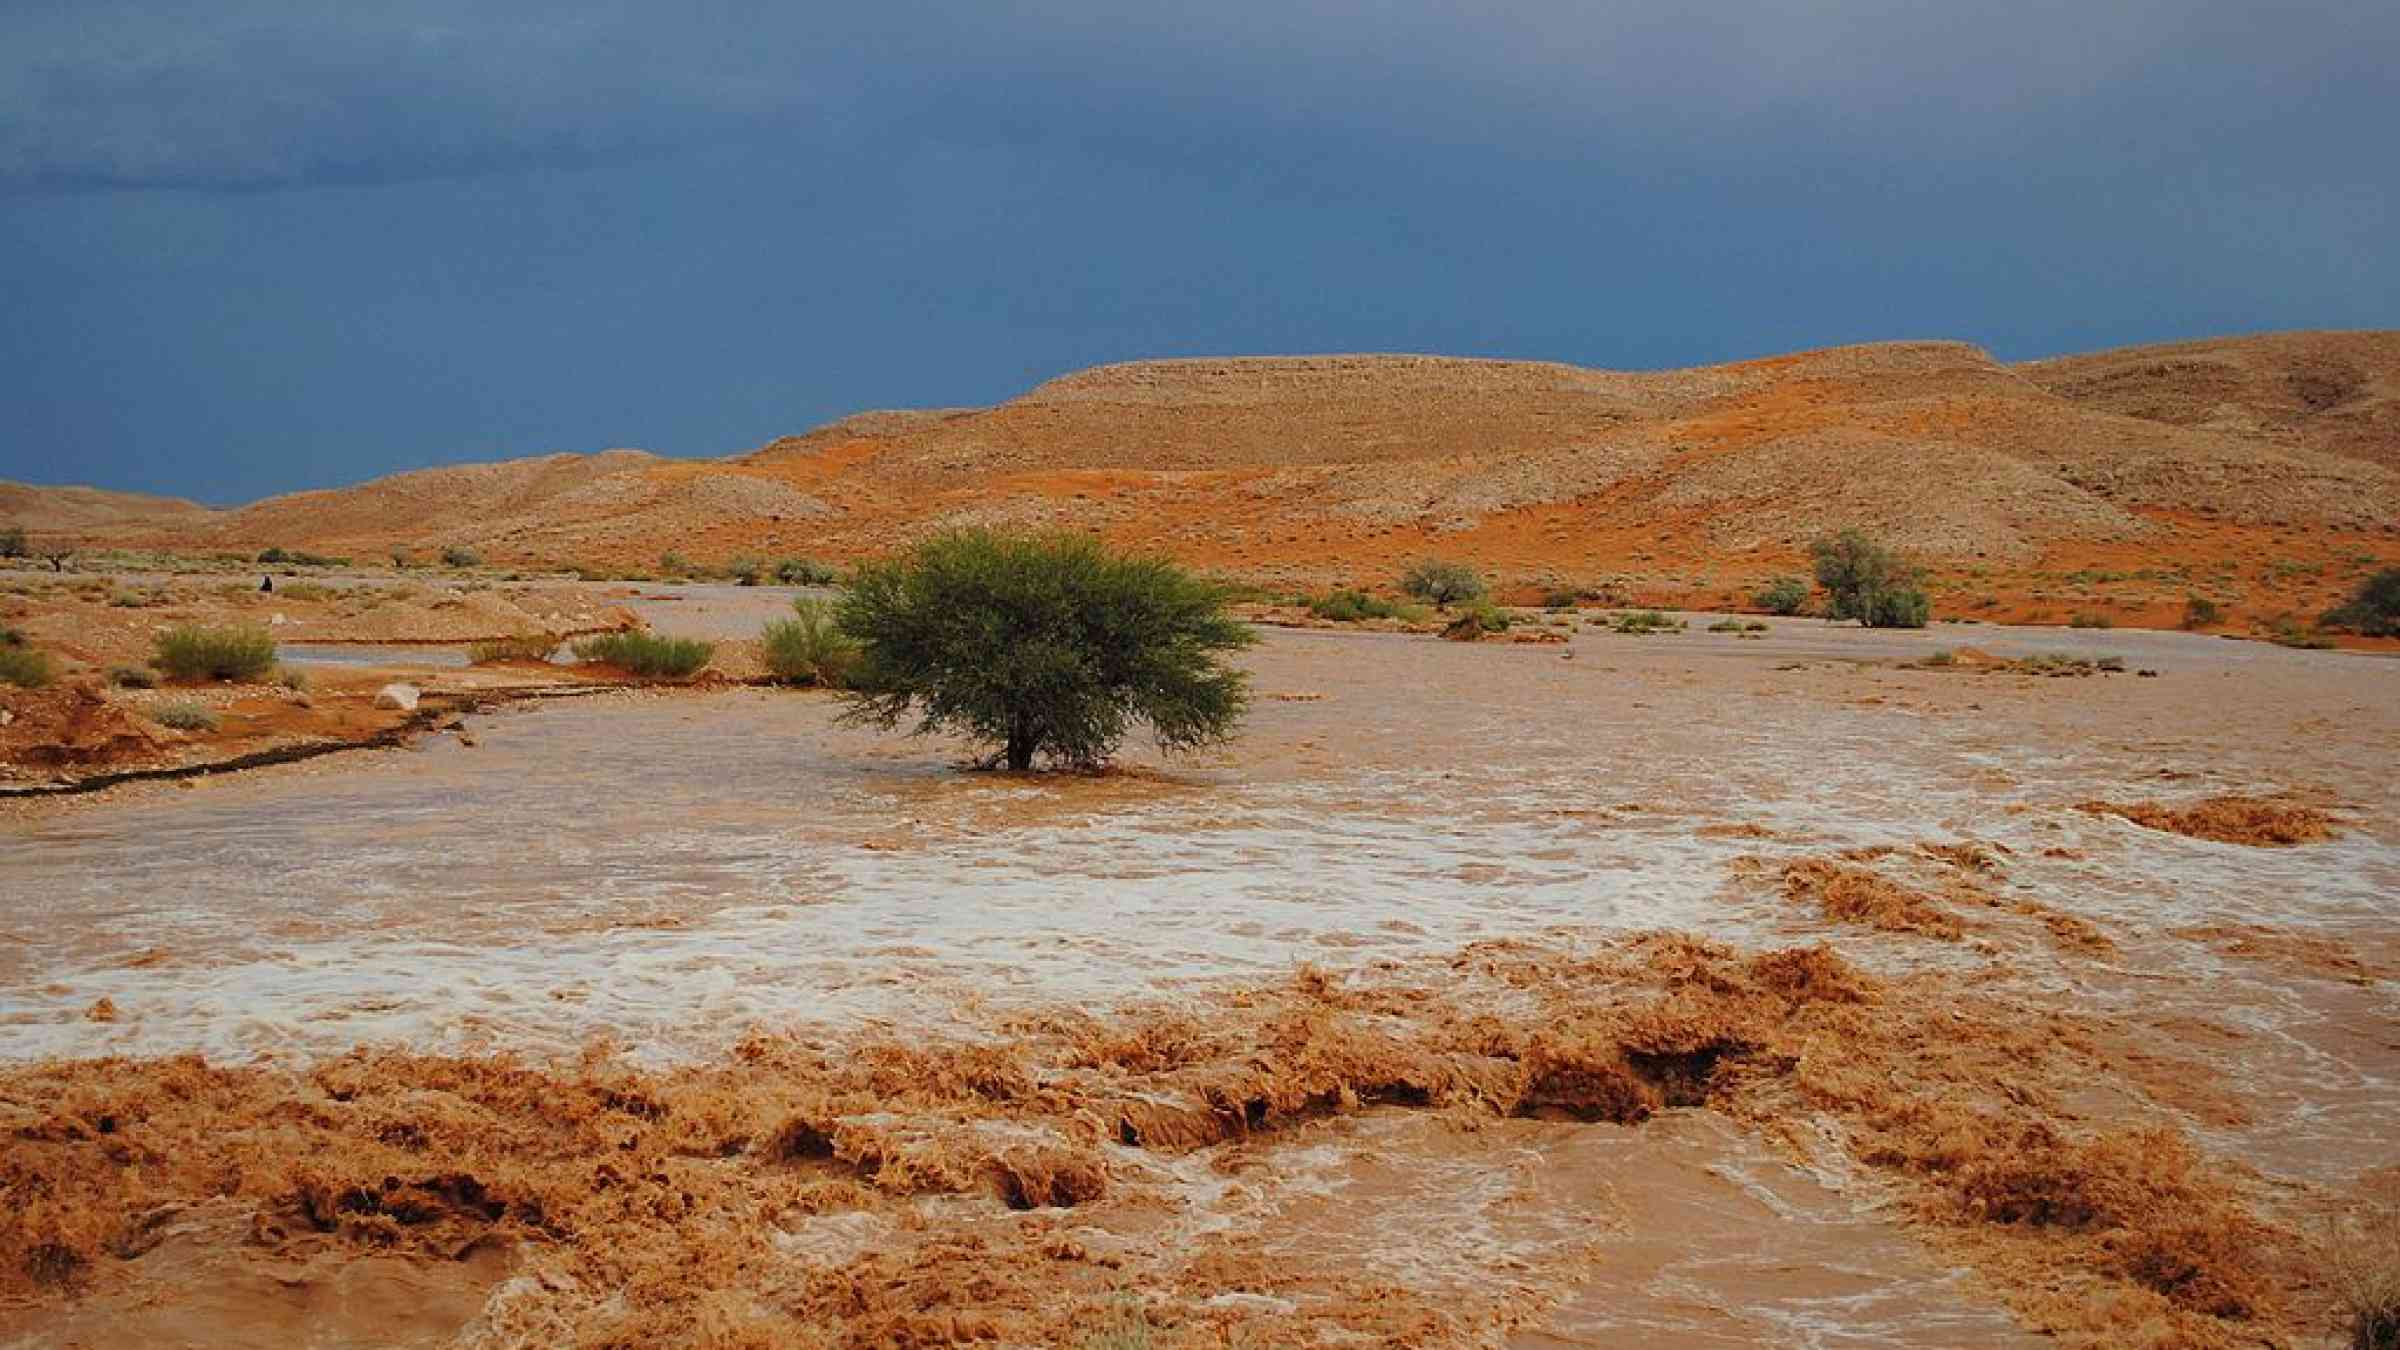 Flash flood in a desert